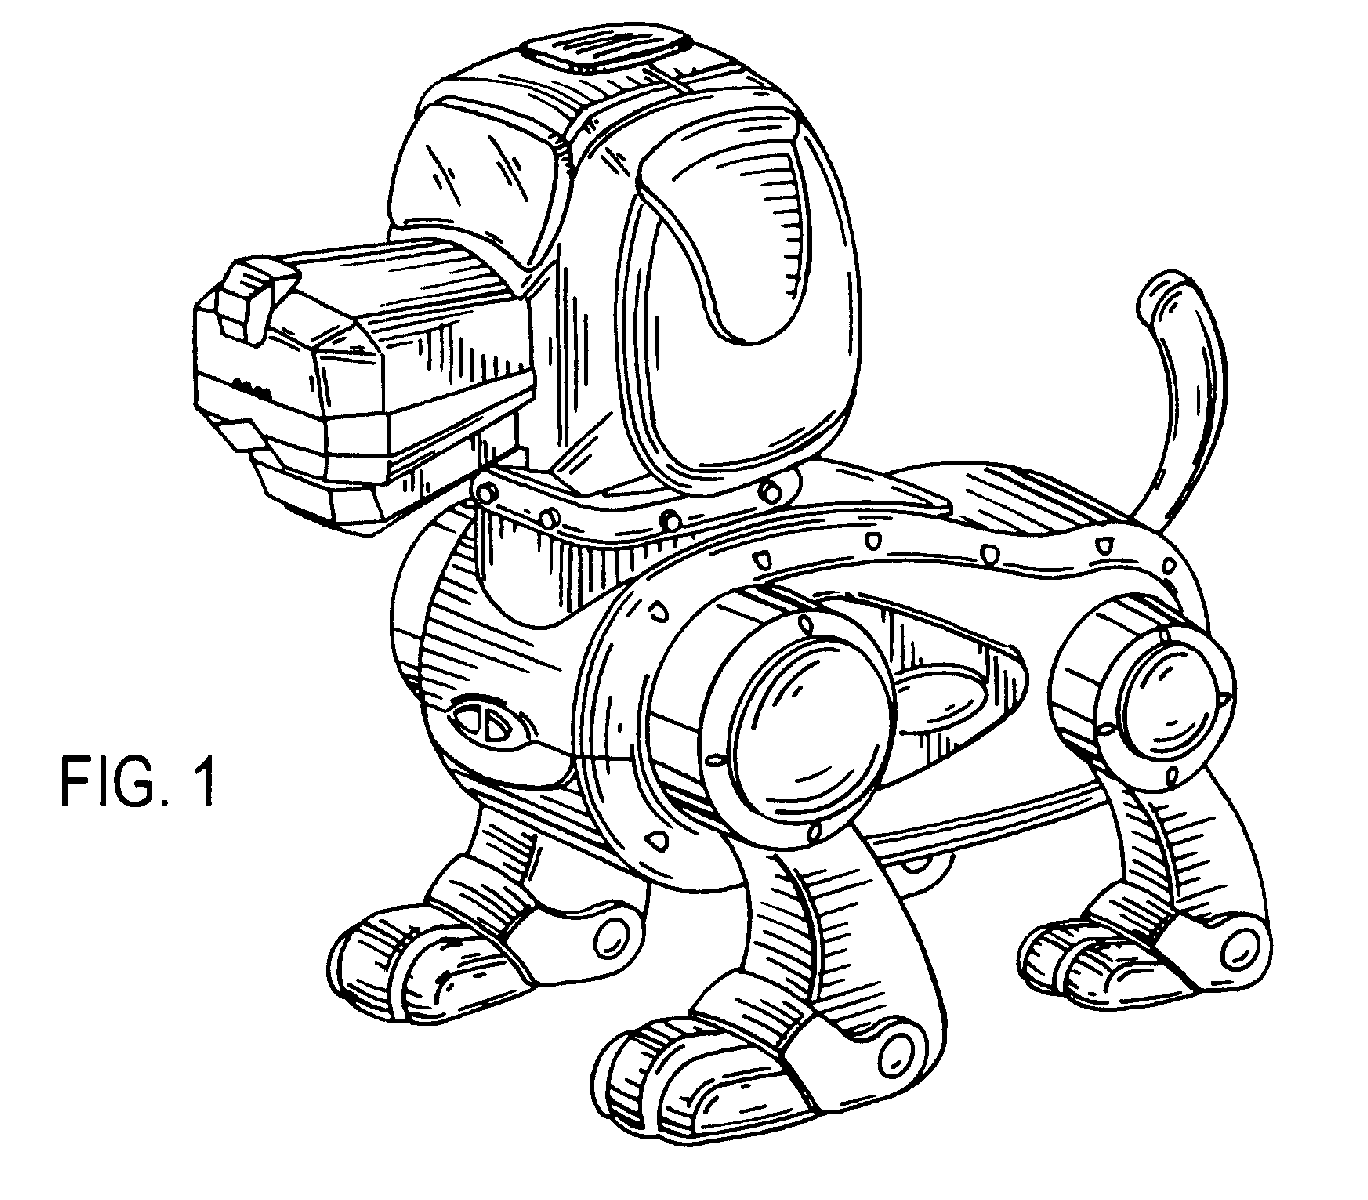 example of a robot dog design